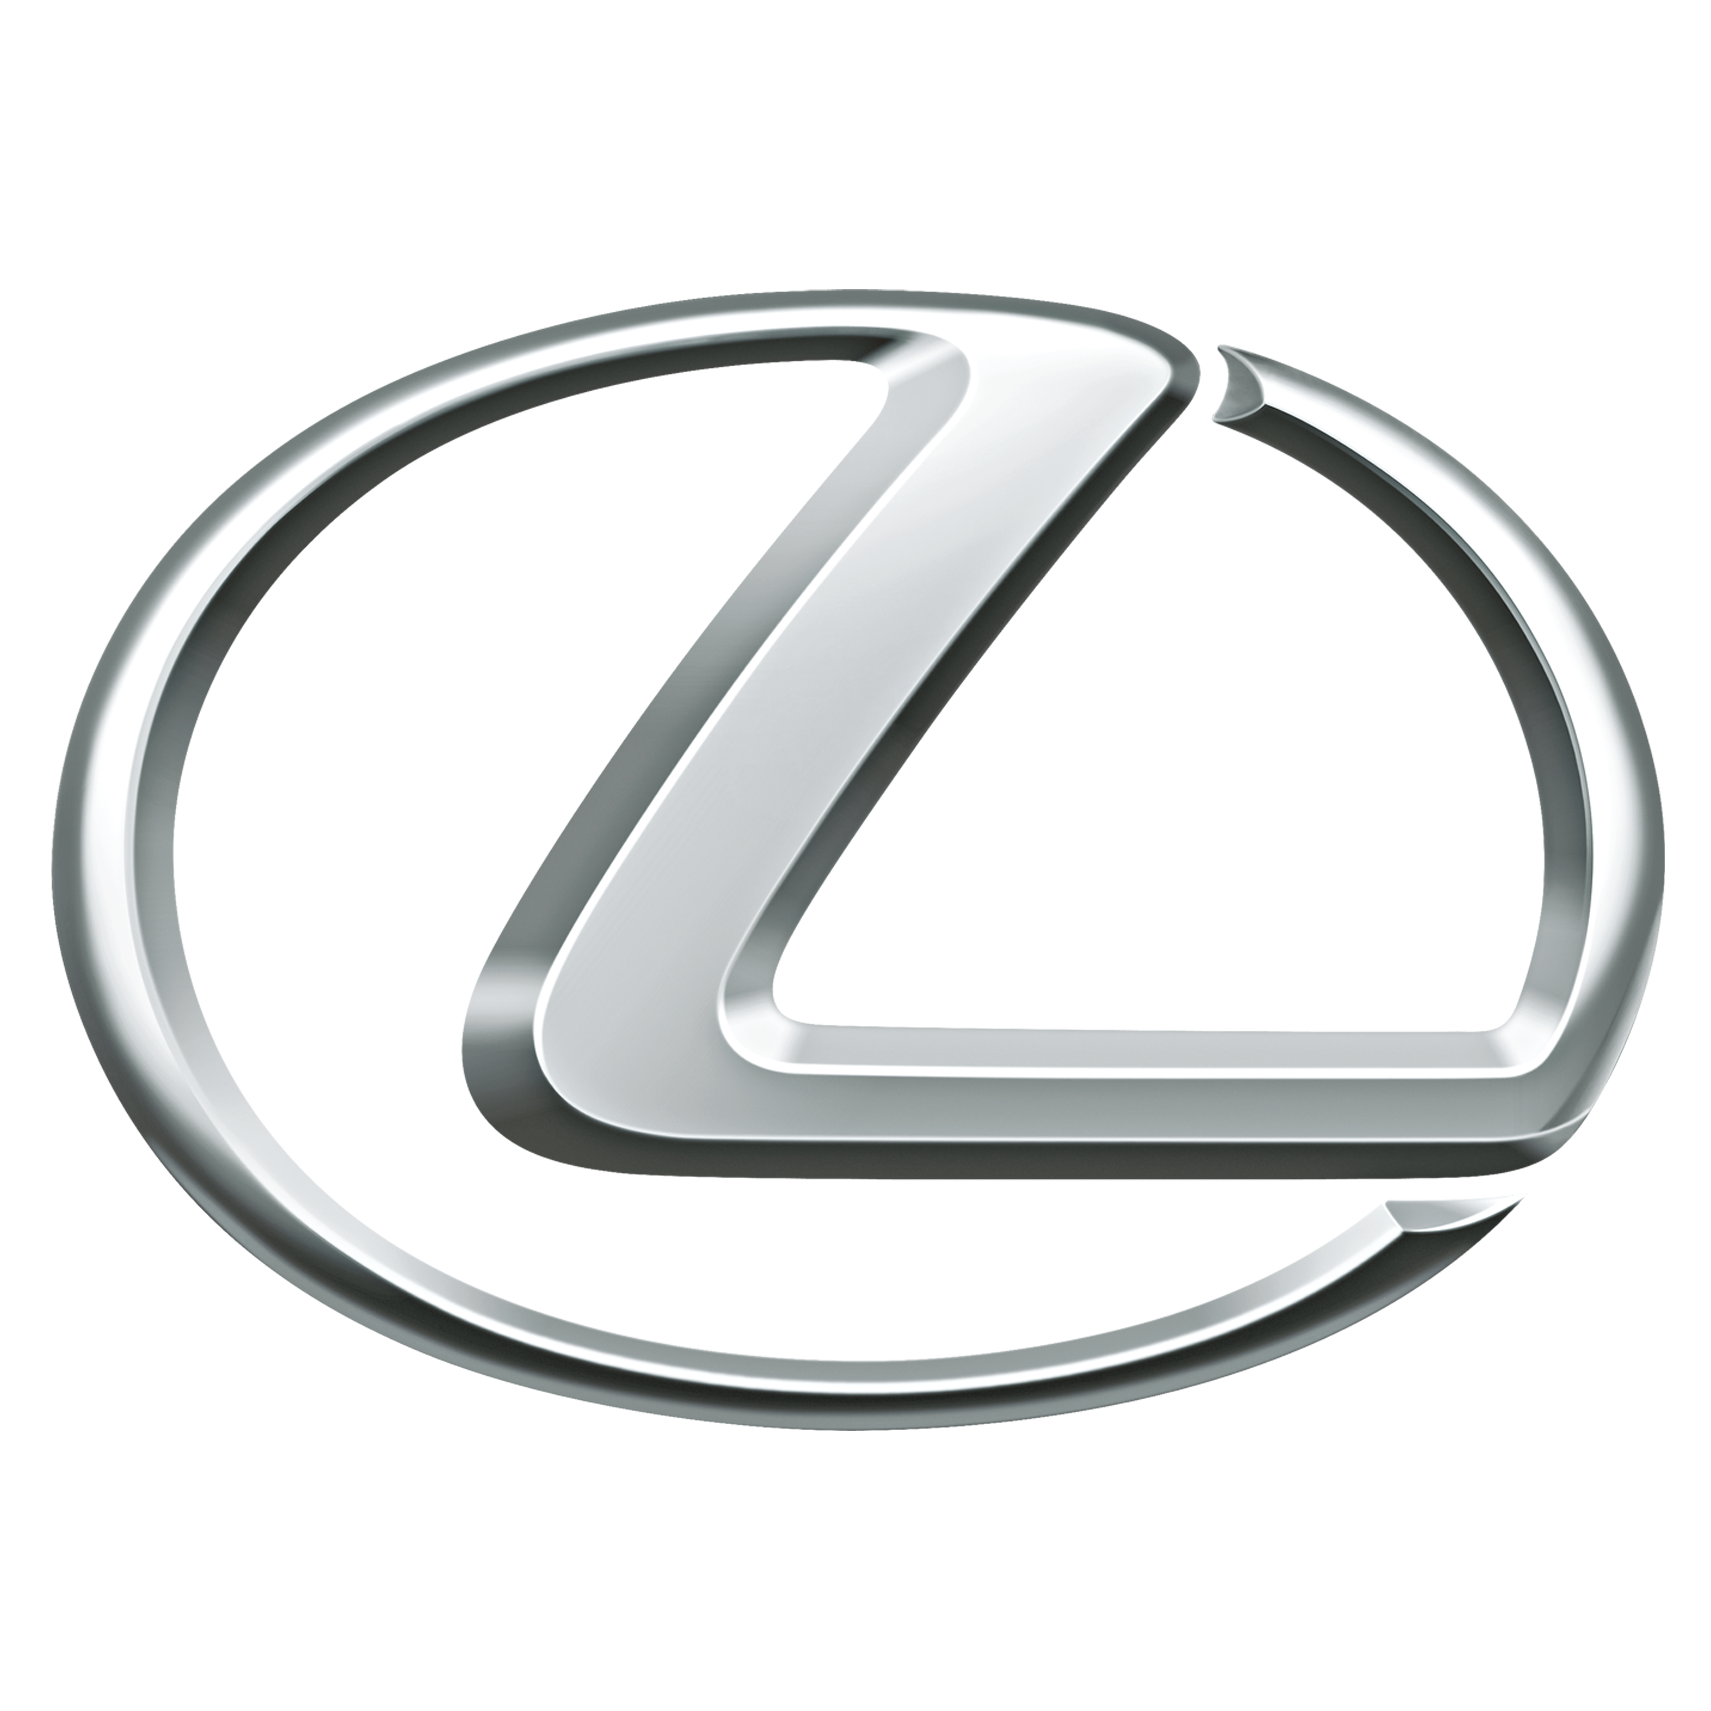 Best Lexus logo iPhone HD Wallpapers  iLikeWallpaper